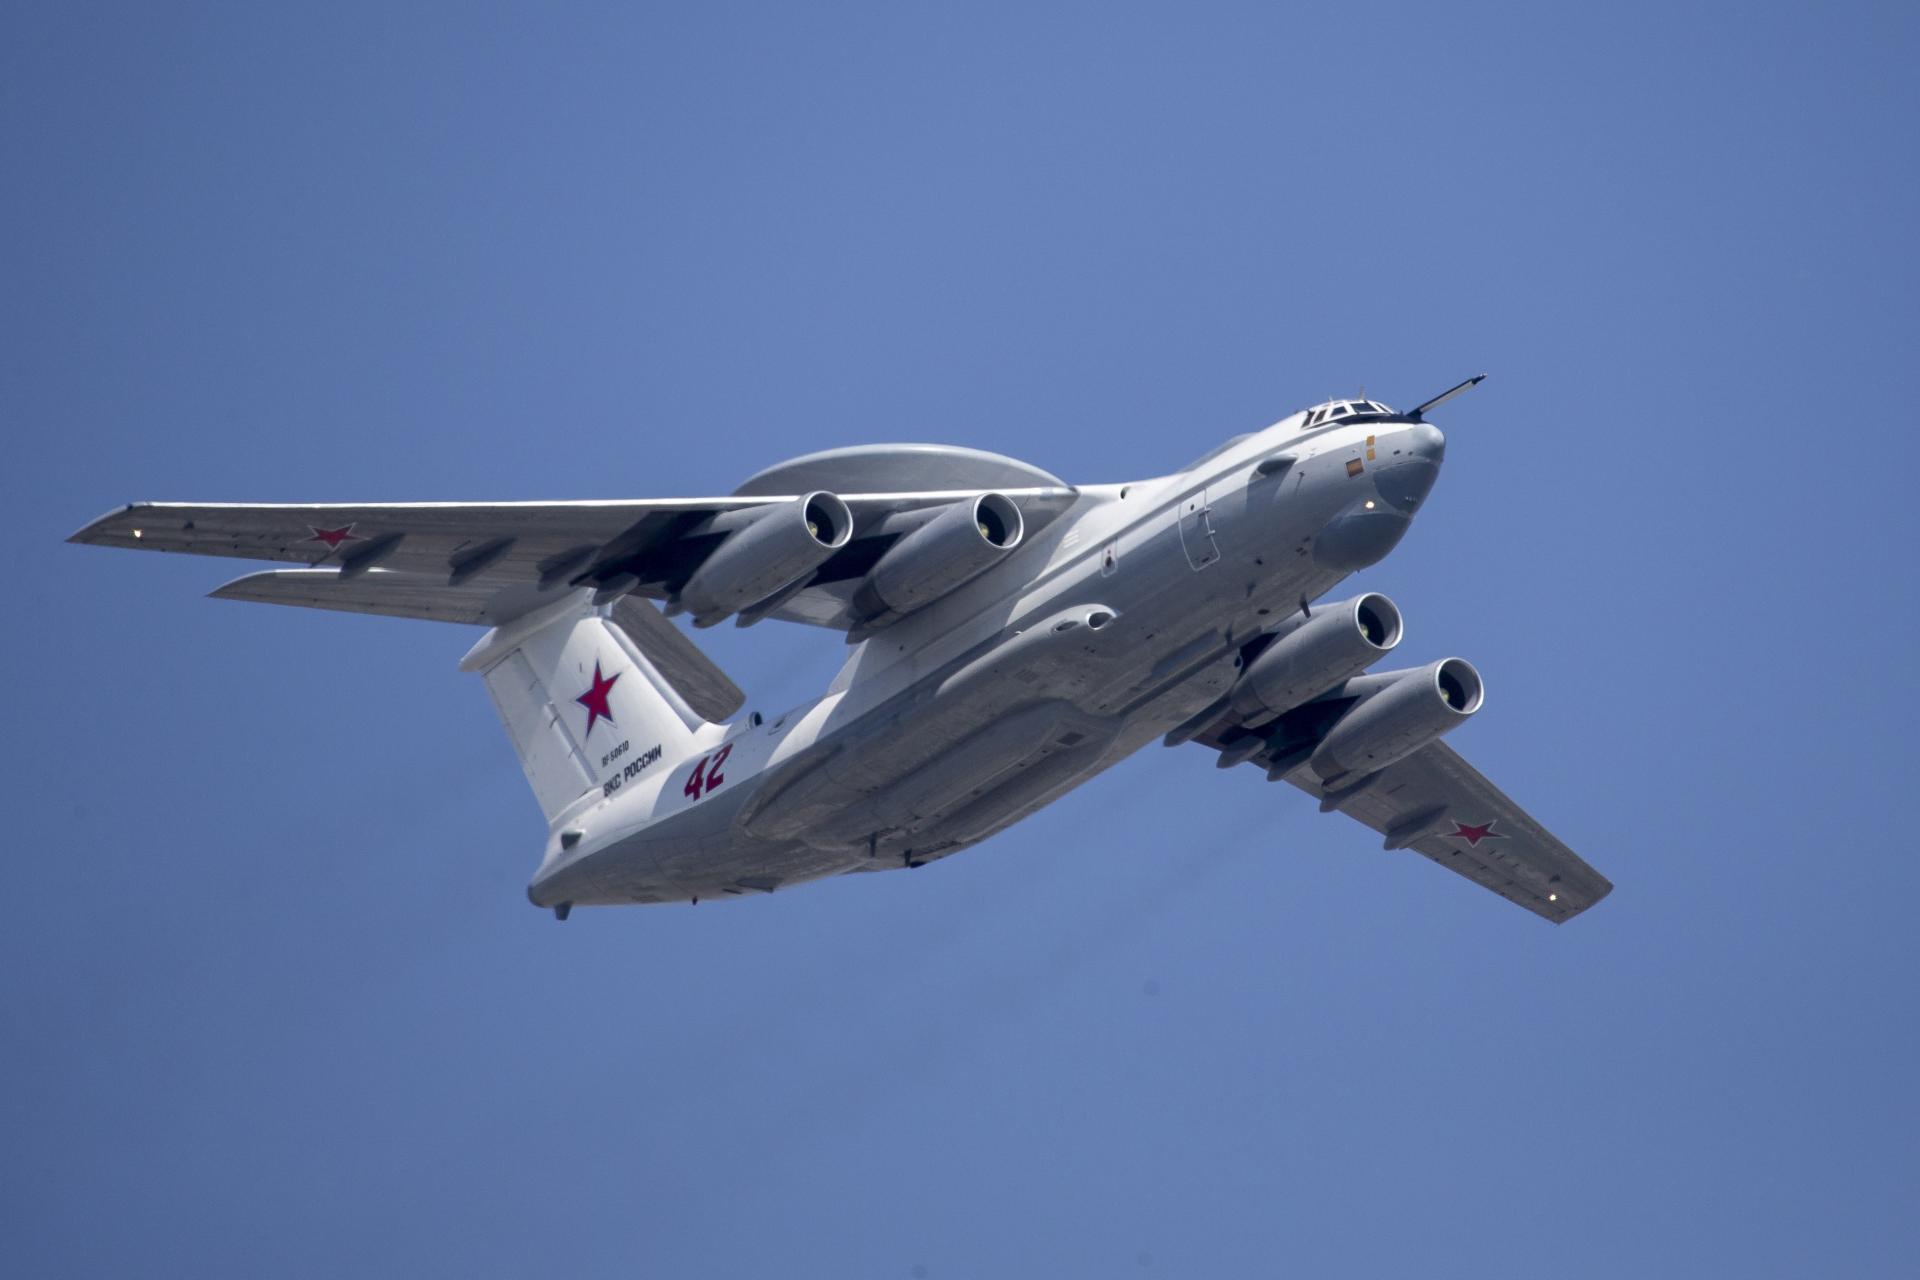 Rusko používa pád lietadla Il-76 na zasiatie nespokojnosti na Ukrajine, tvrdia americkí analytici